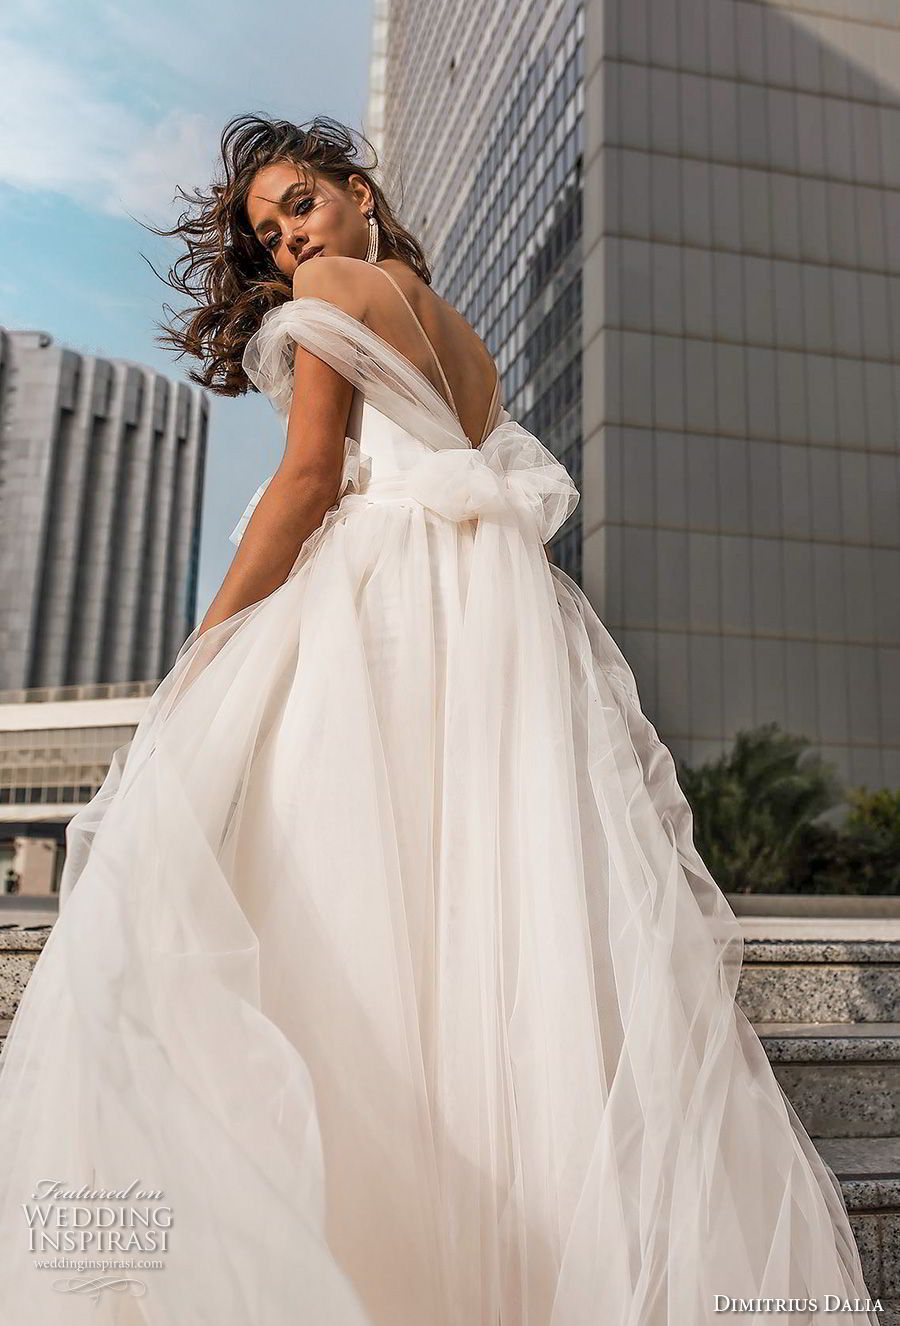 dimitrius dalia 2018 royal off the shoulder sweetheart neckline simple tulle skirt romantic soft a  line wedding dress open v back (12) zbv